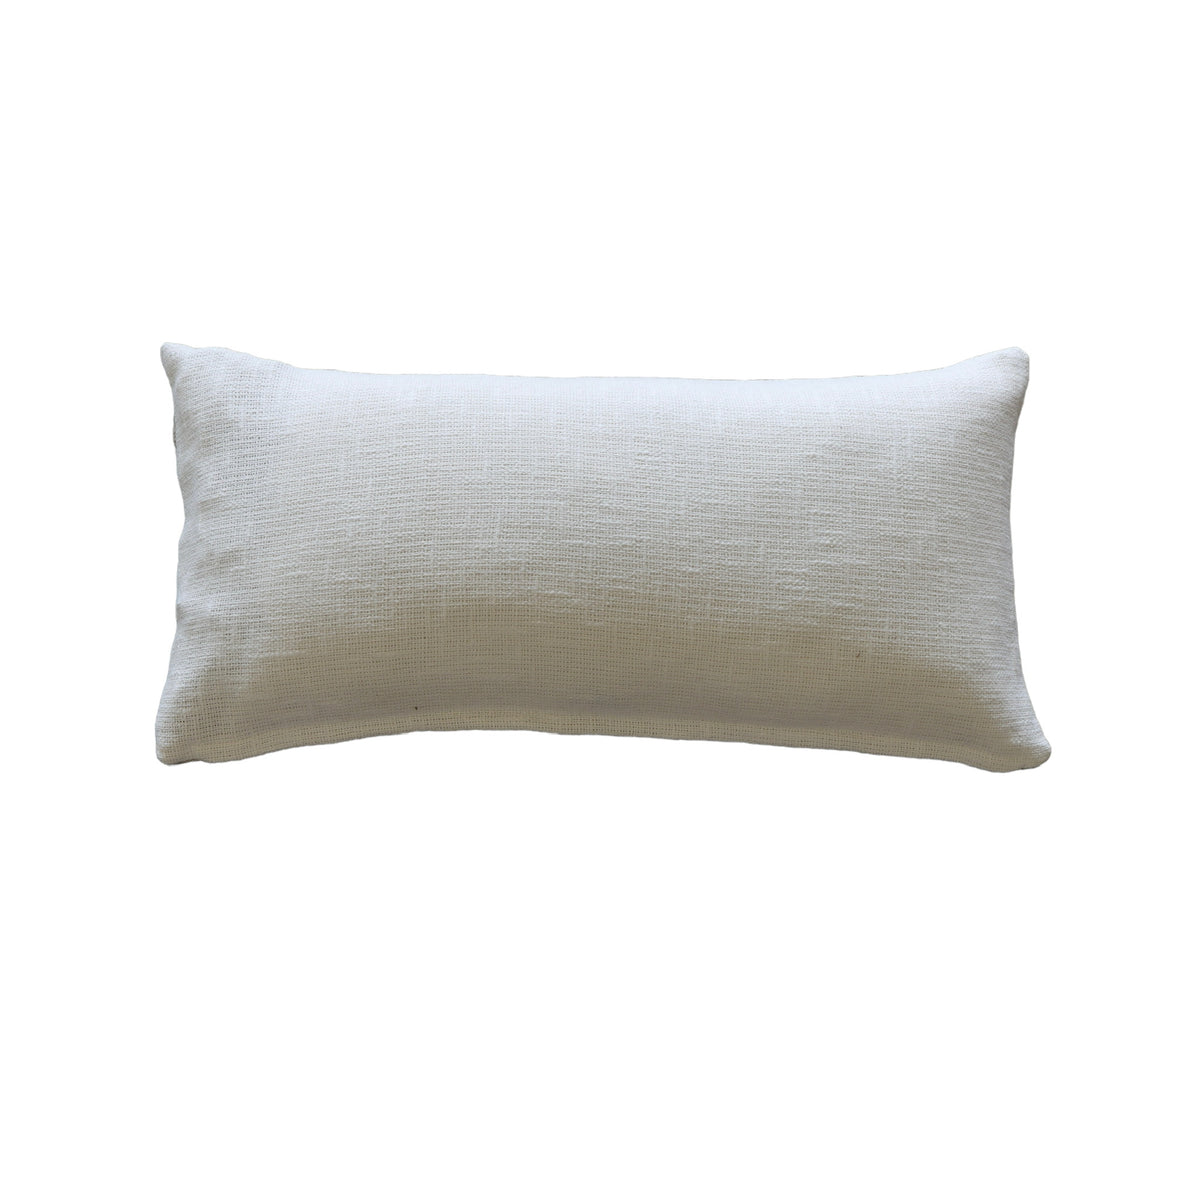 Bri Coffee Gingham Lumbar Pillow Cover - Holistic Habitat 